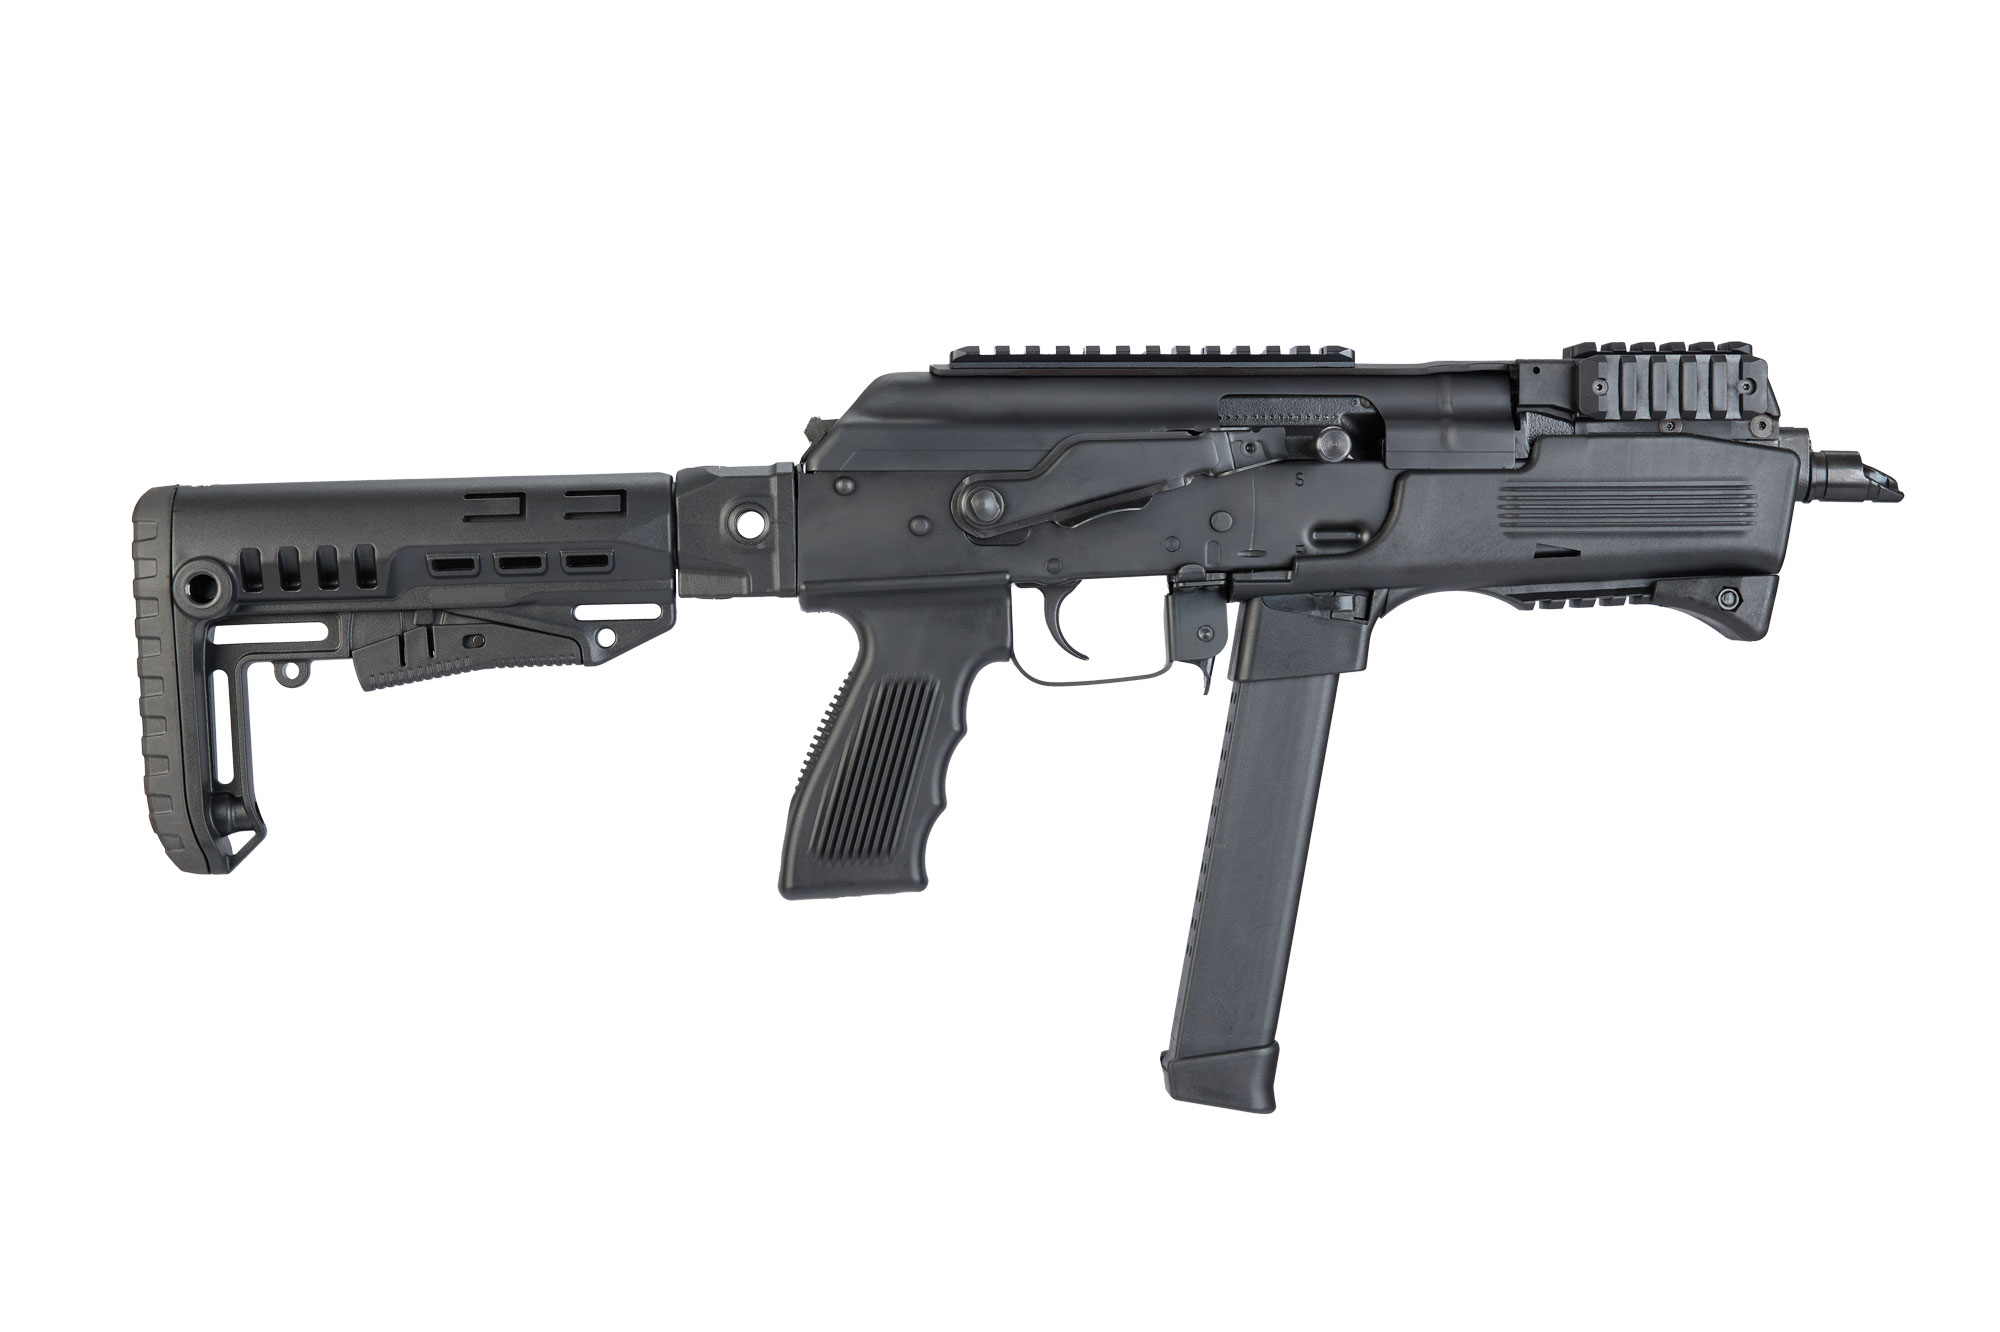 PAK9 Tactical Pistol (PAK9TP) semi-automatic shoulder-fired pistol cal. 9x19